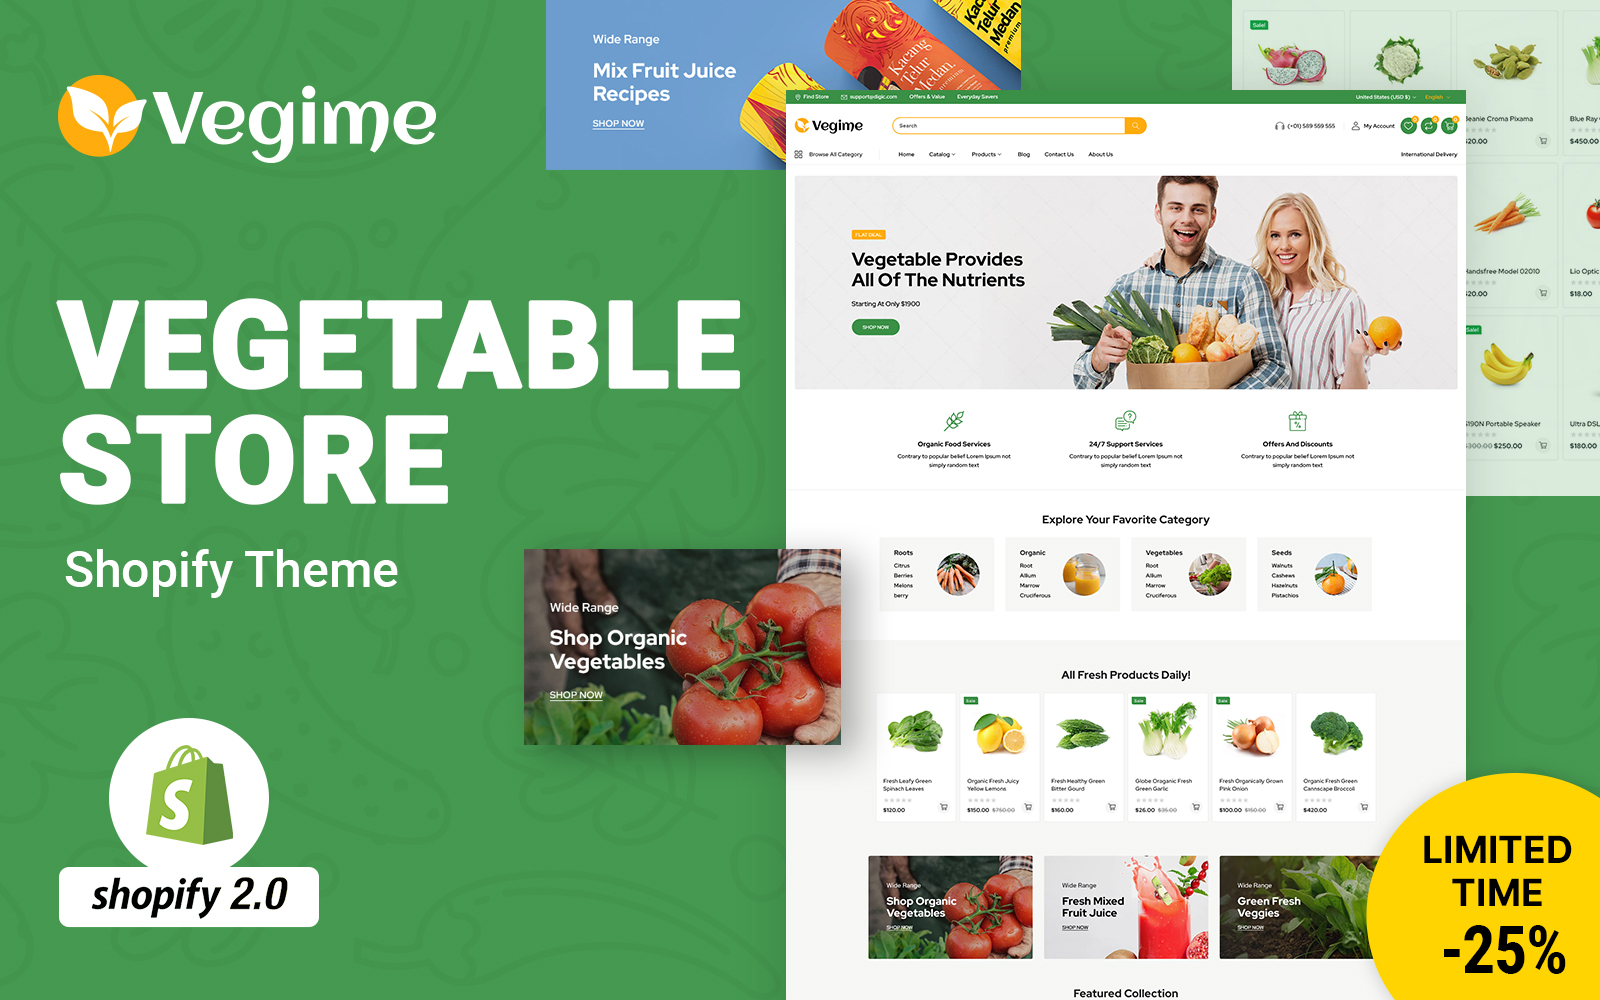 Vegime Vegetable & Grocery Shopify Theme